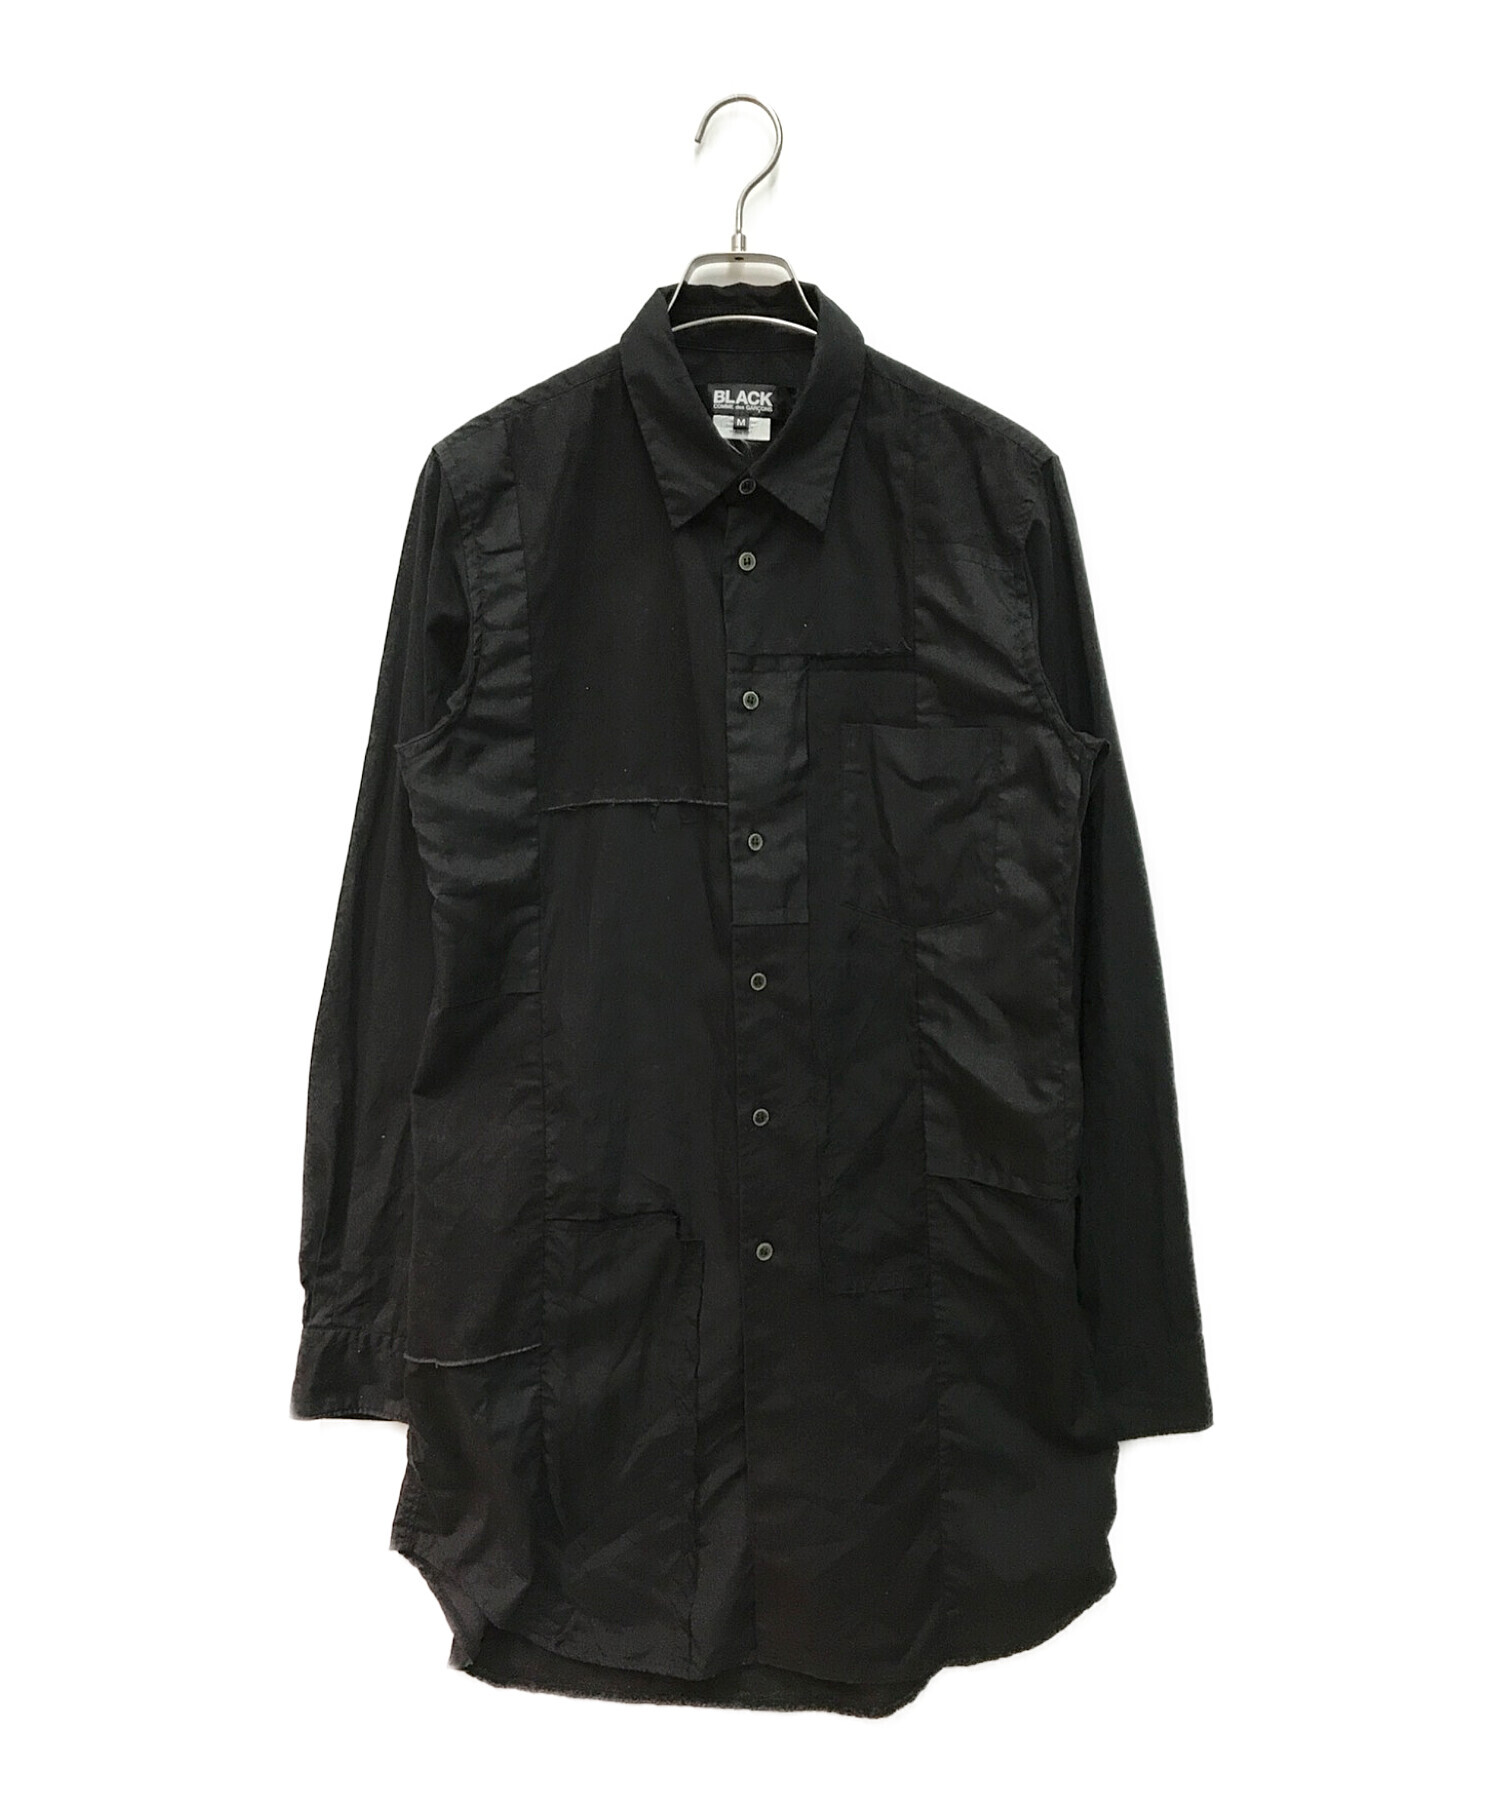 BLACK COMME des GARCONS (コムデギャルソン) 再構築ロングシャツ ブラック サイズ:M